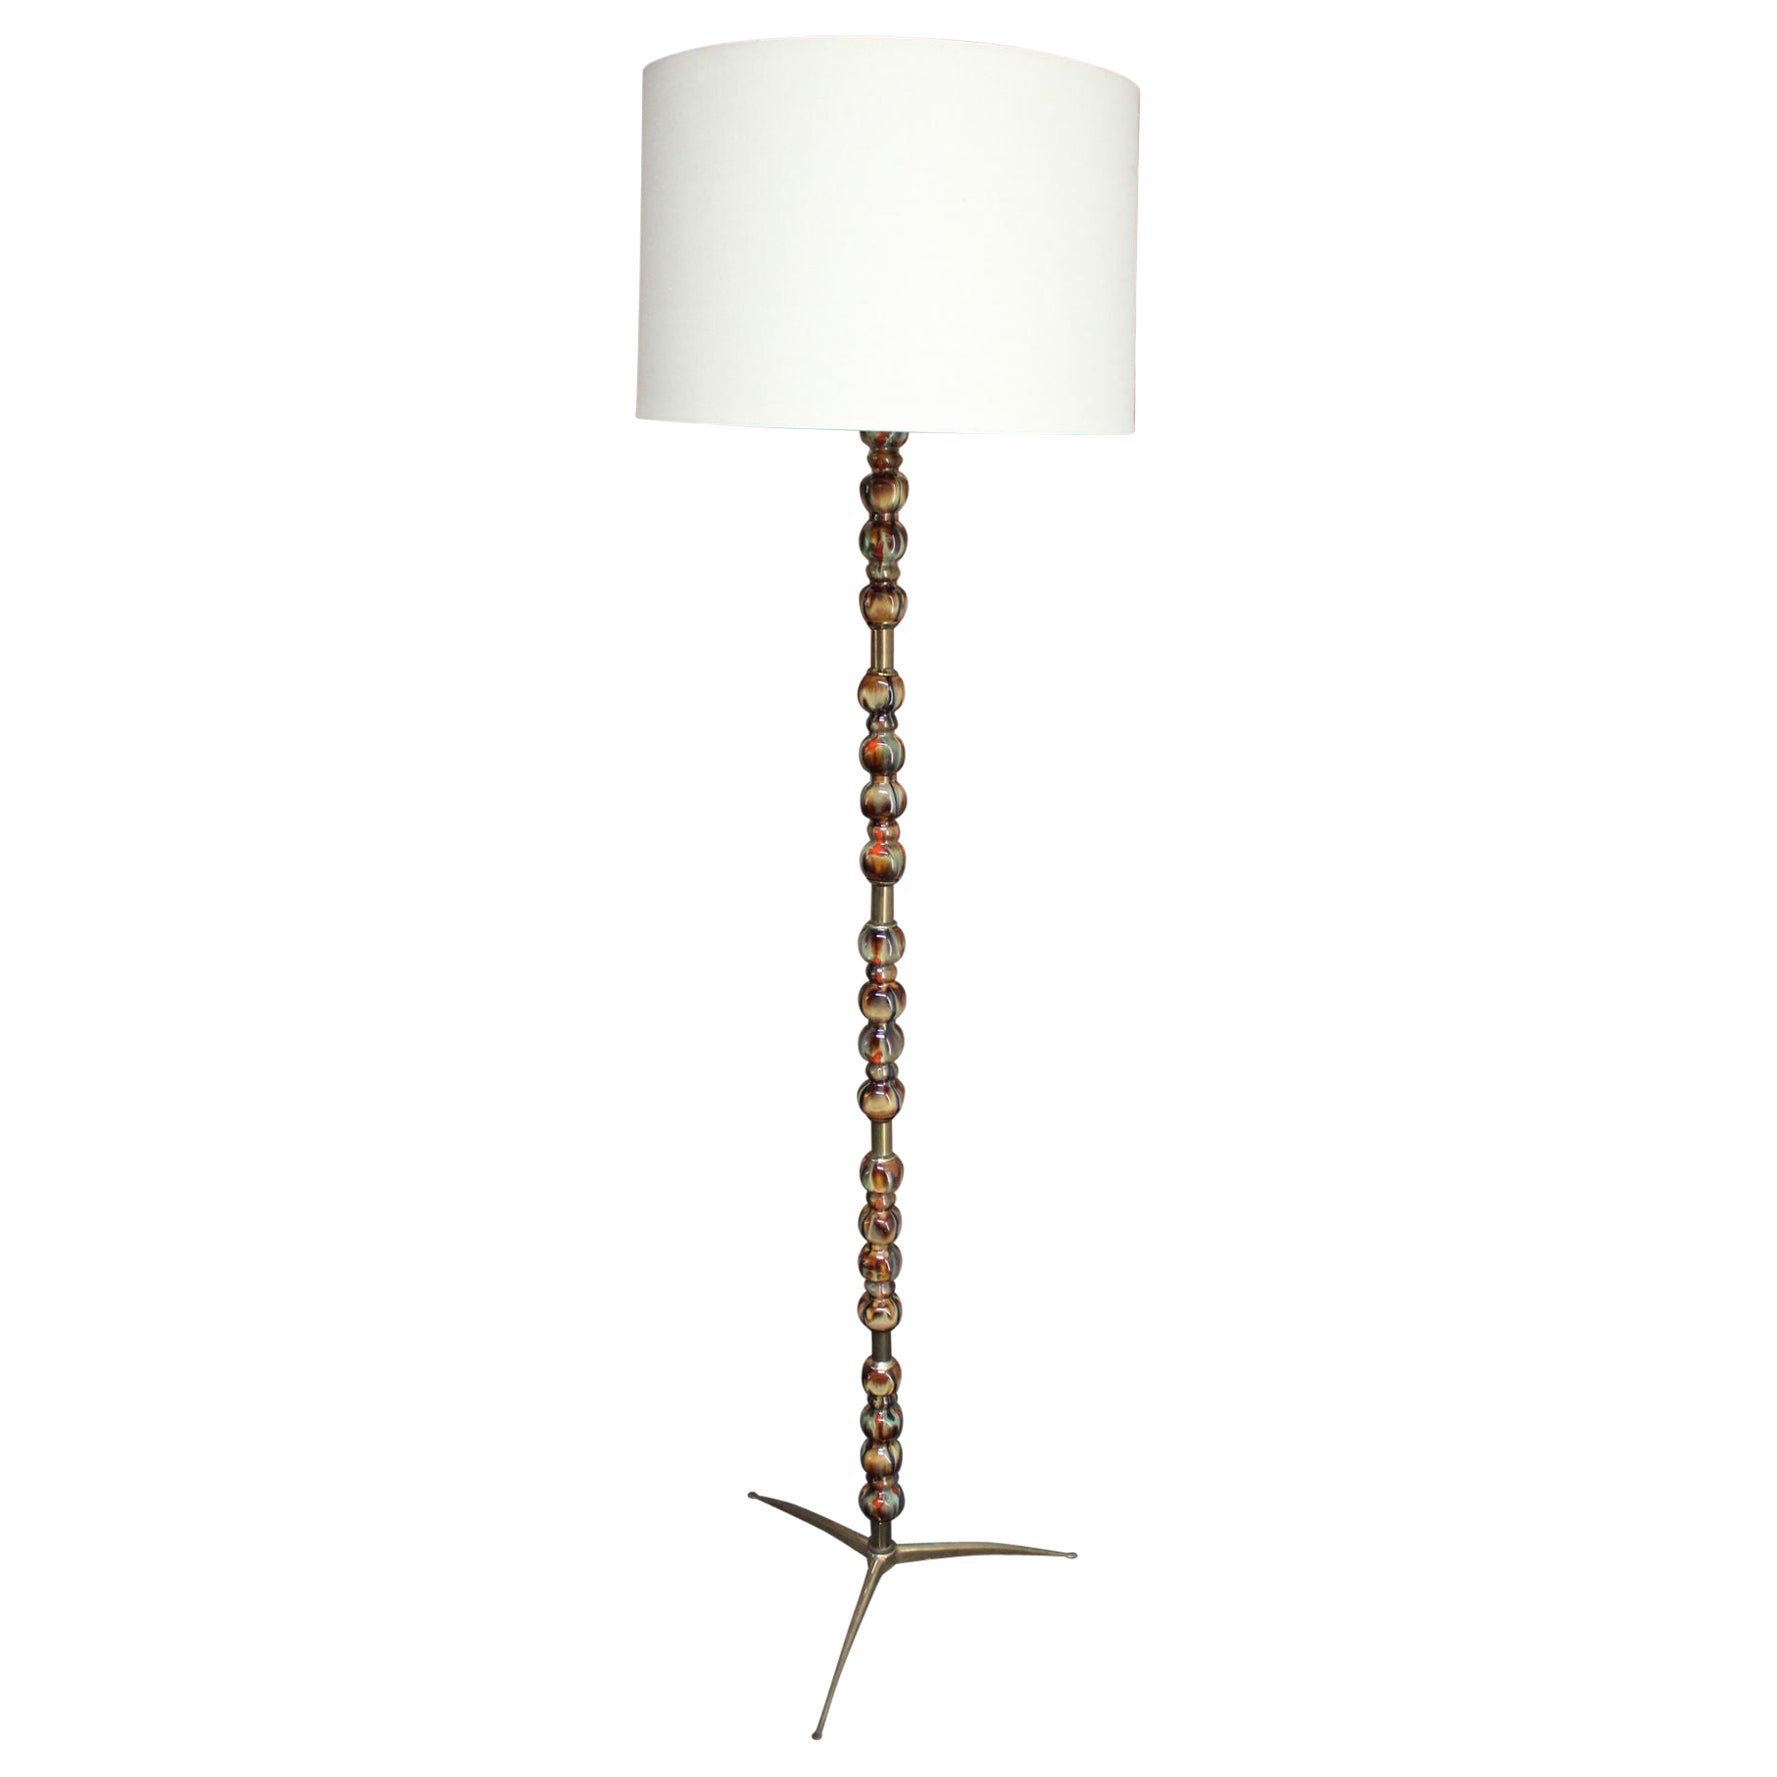 Italian Modernist Ceramic Floor Lamp with Brass Tripod Base For Sale